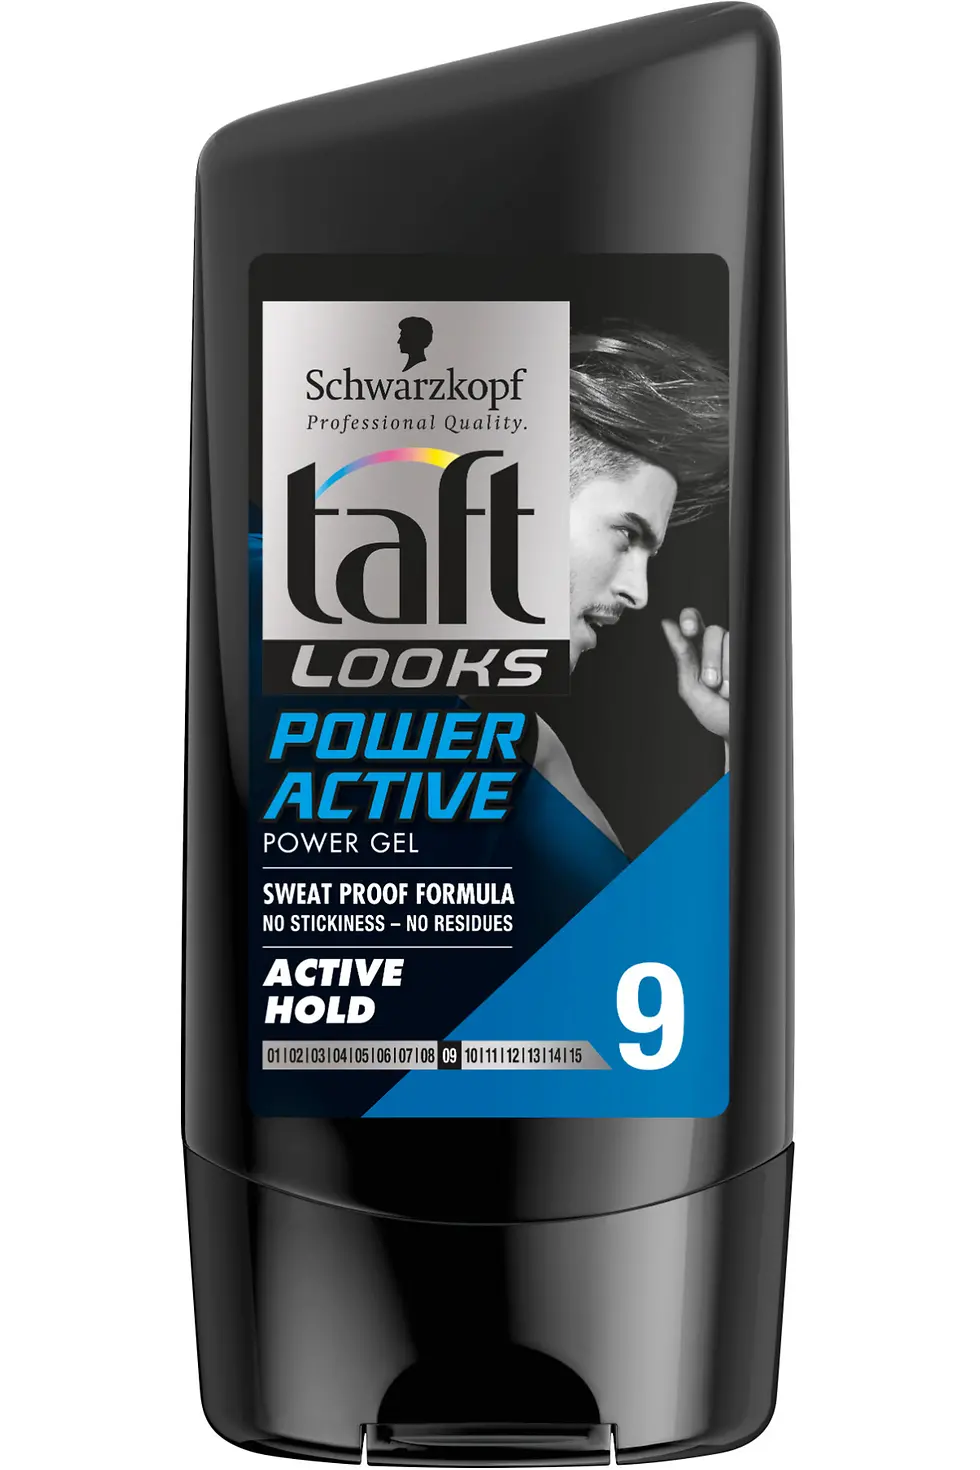 Taft Looks Power Active Power Gel